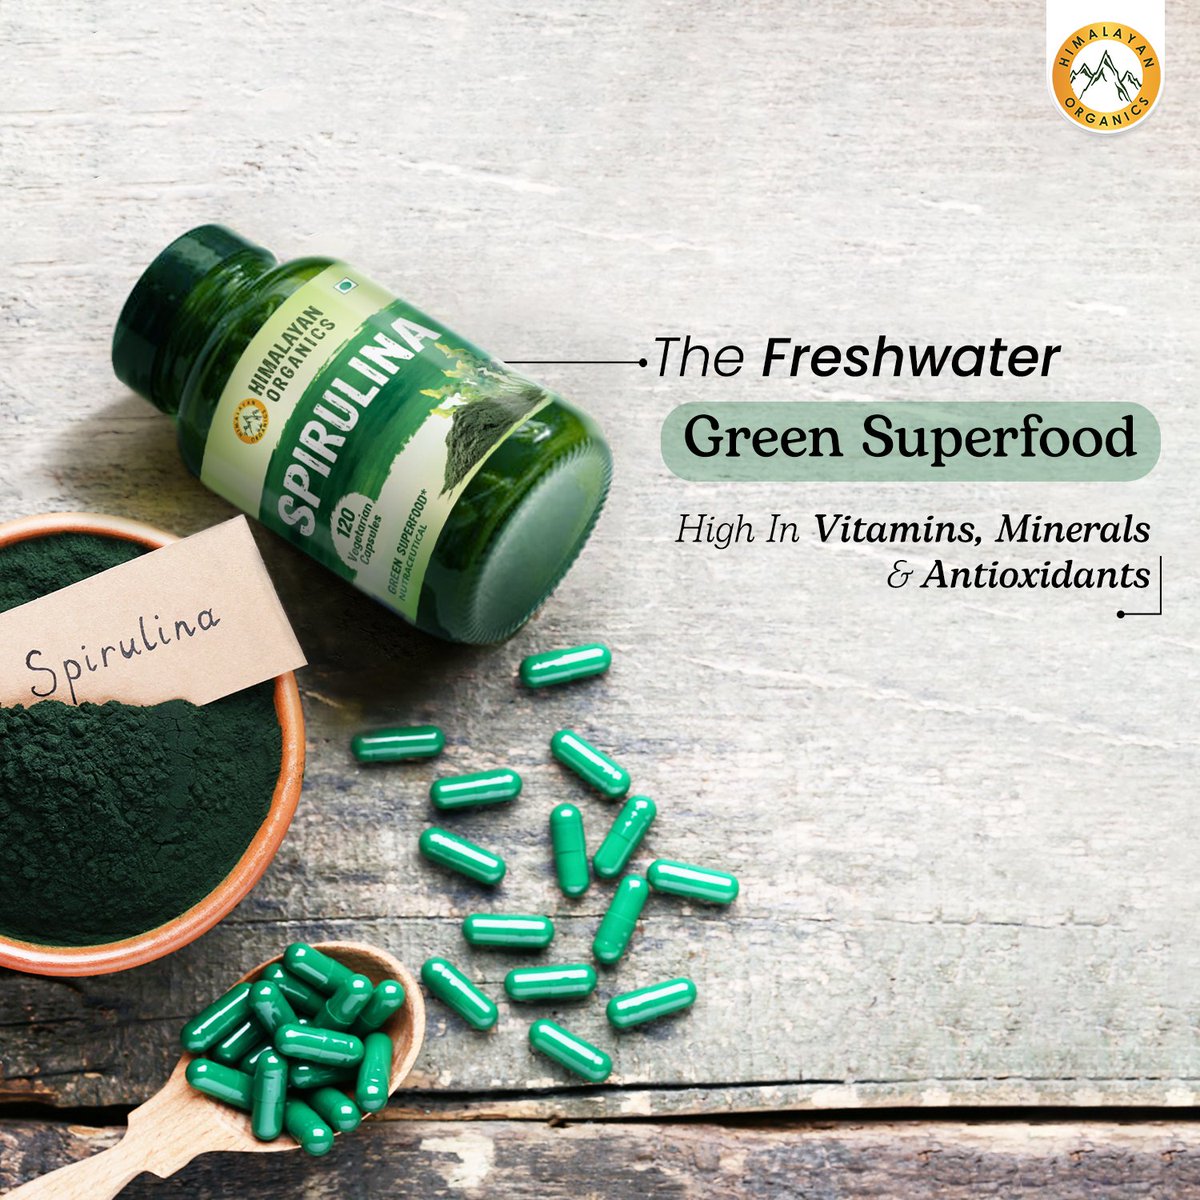 Nourish your body with the power of freshwater green superfood “Spirulina”.
#SpirulinaBenefits #OrganicSuperfood #ImmuneBoosting #HeartHealthSupport #WellnessJourney #HimalayanOrganics